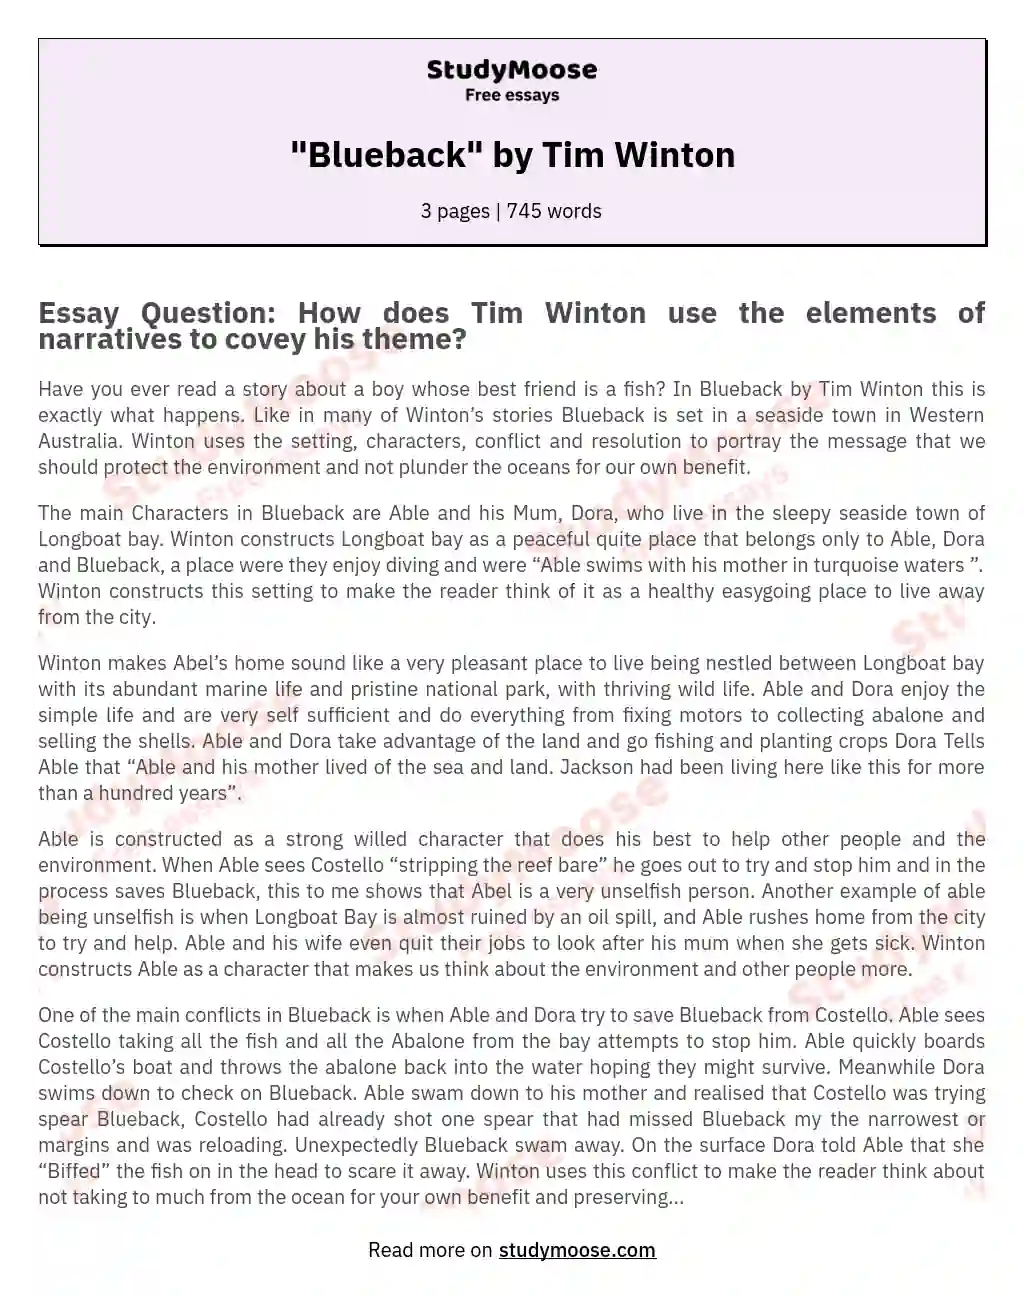 "Blueback" by Tim Winton essay